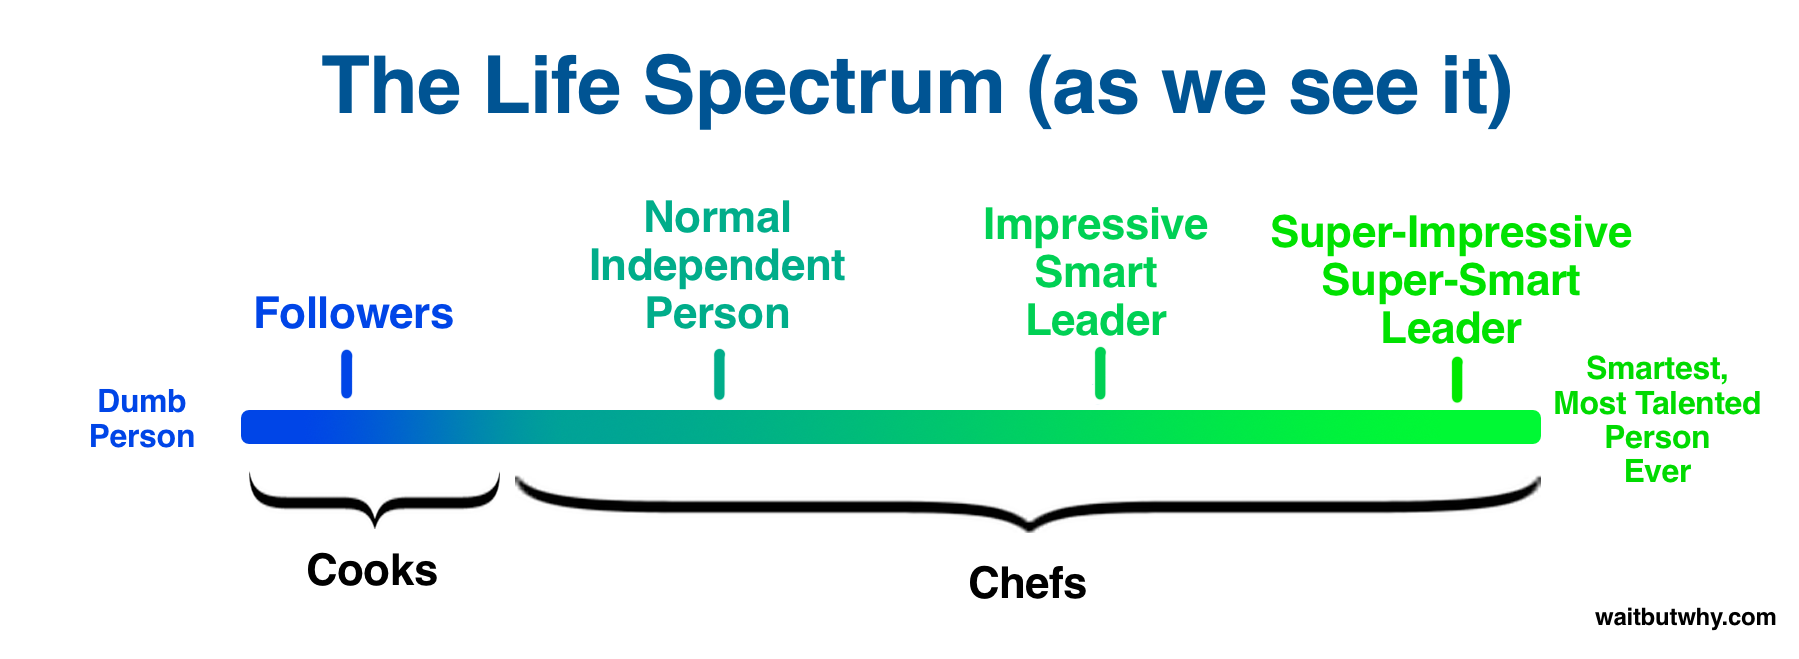 Chef-Cook Life Spectrum Skewed